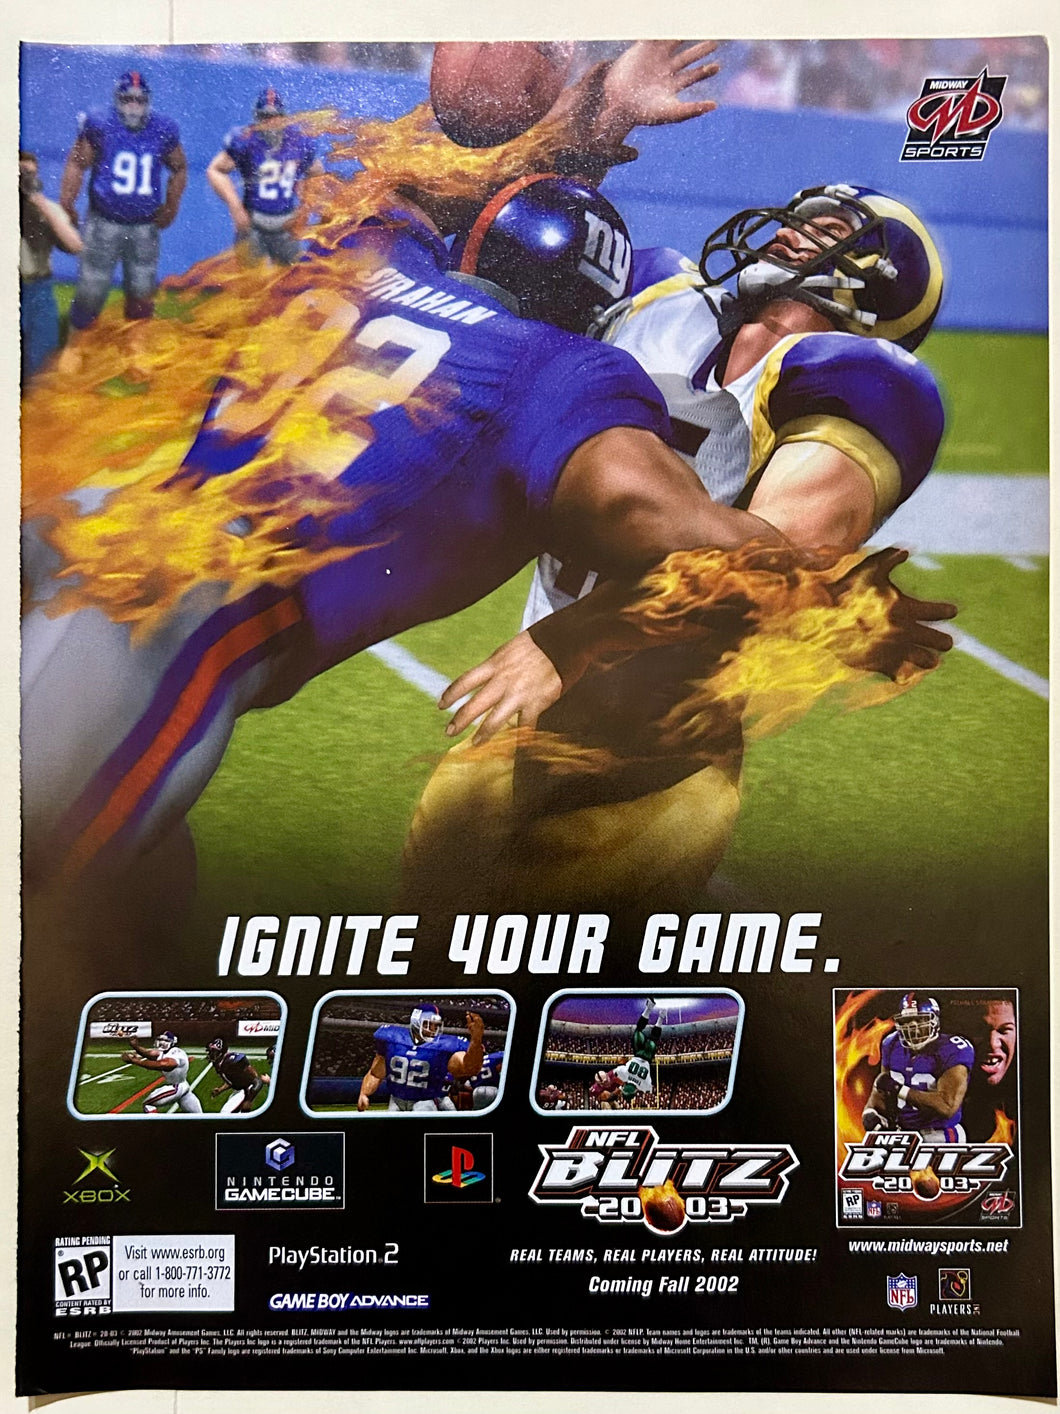 NFL Blitz 2003 - PS2 Xbox NGC GBA - Original Vintage Advertisement - Print Ads - Laminated A4 Poster